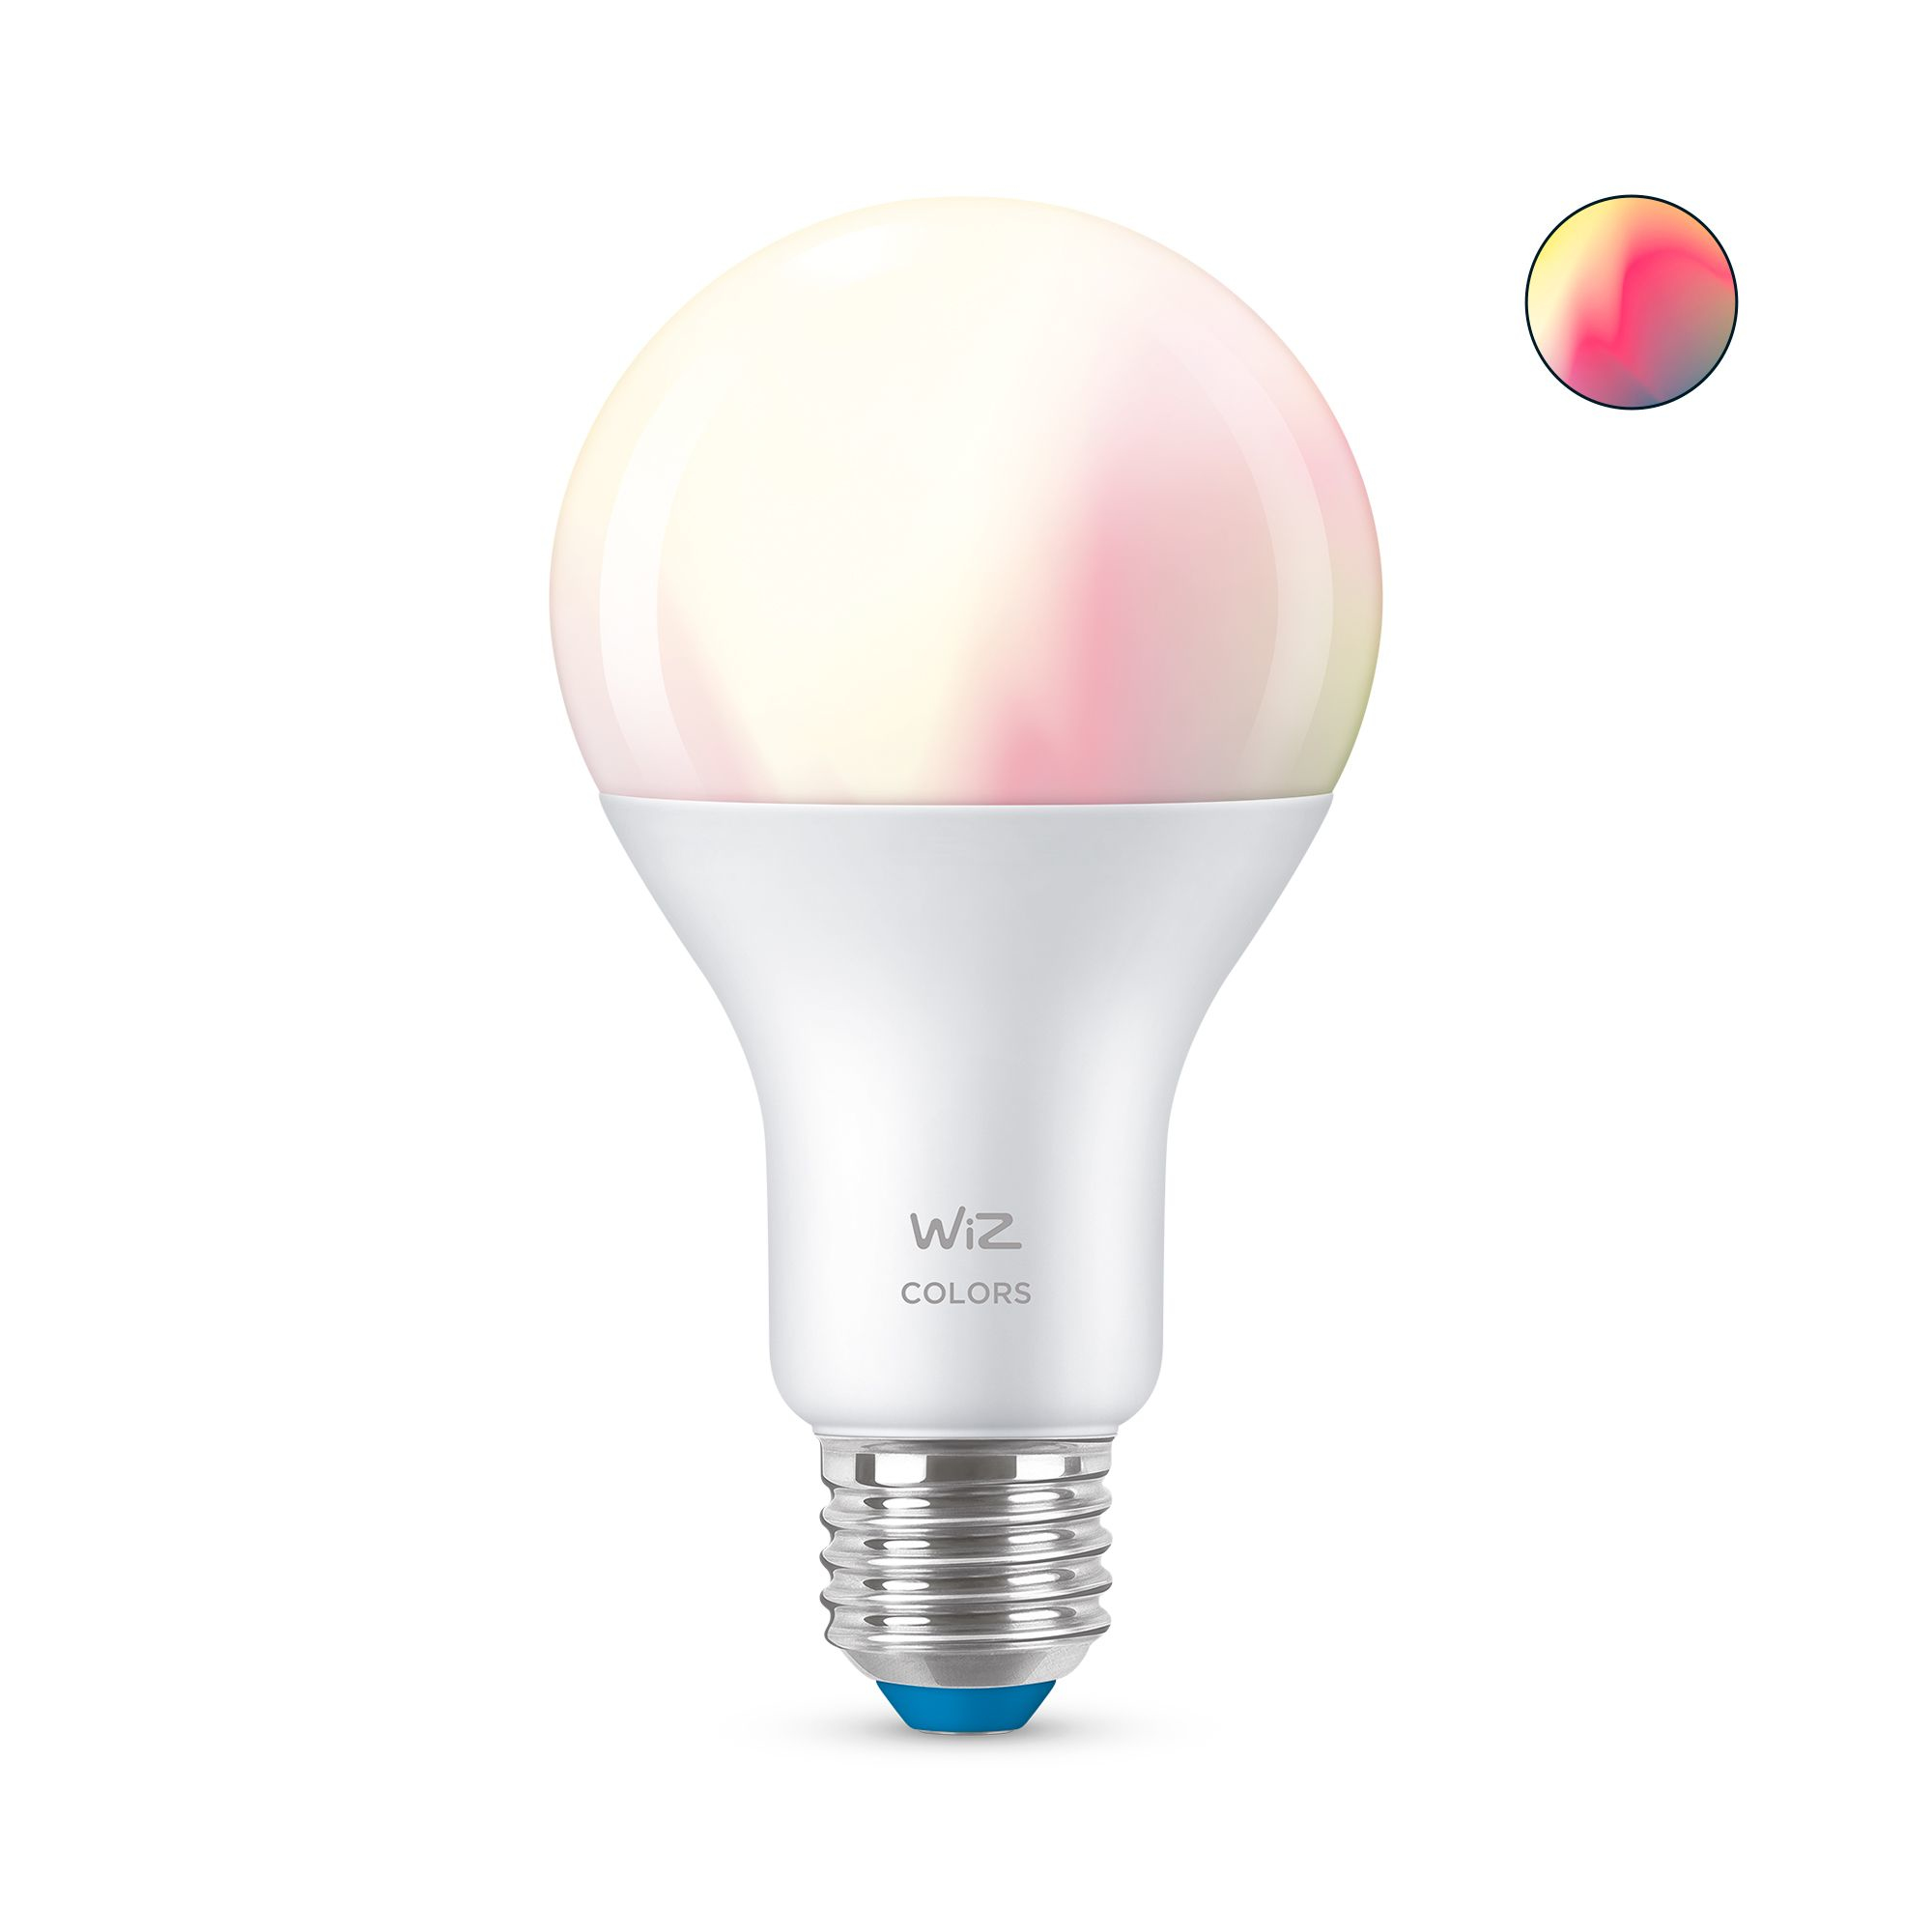 WIZCONNECTED WiZ 8718699786199 - Intelligente Glühbirne - Weiß - WLAN - E27 - Multi - 2200 K